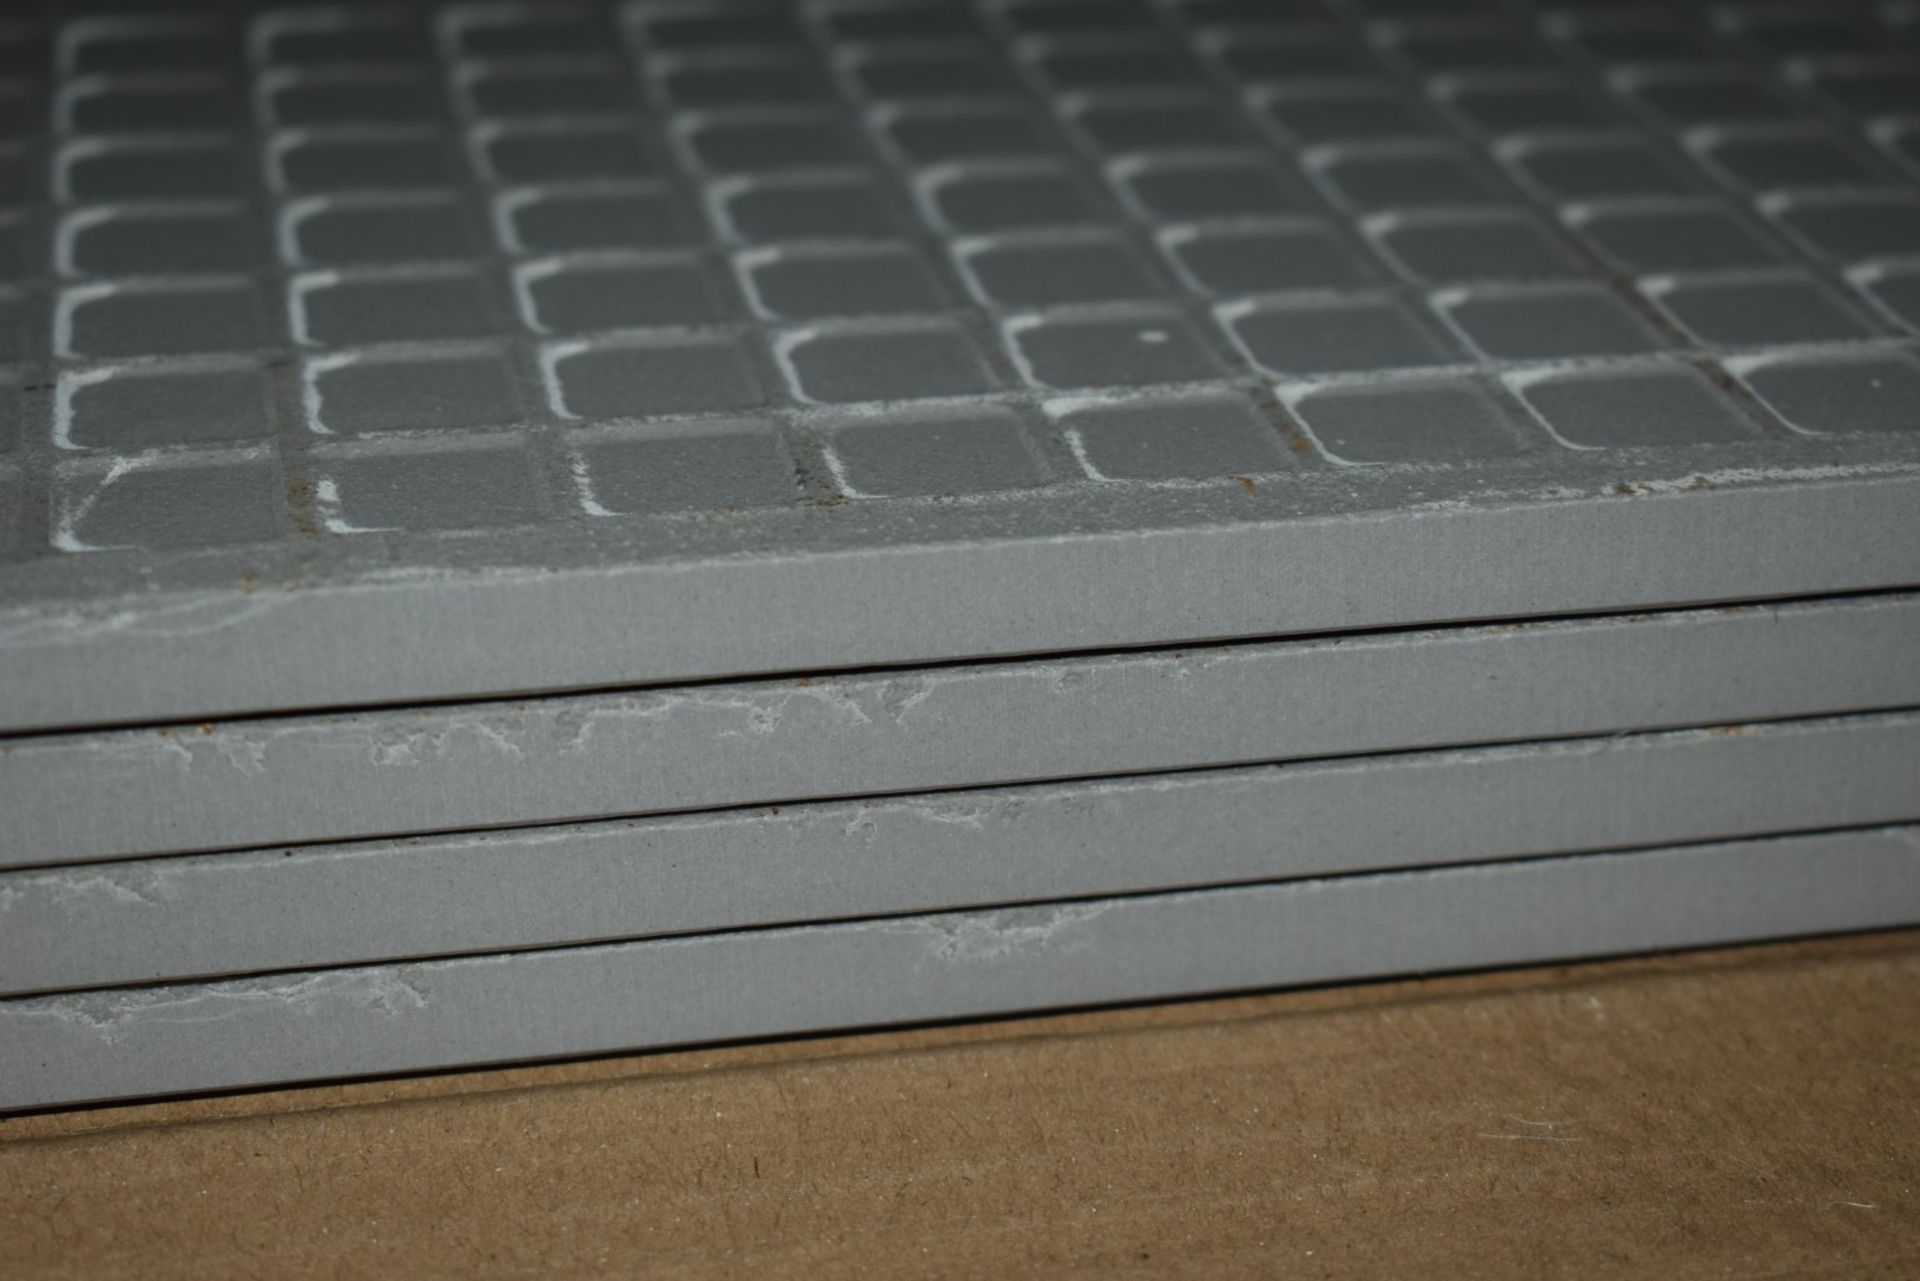 6 x Boxes of RAK Porcelain Floor or Wall Tiles - Concrete Design in Clay Brown - 60 x 60 cm - Bild 6 aus 7